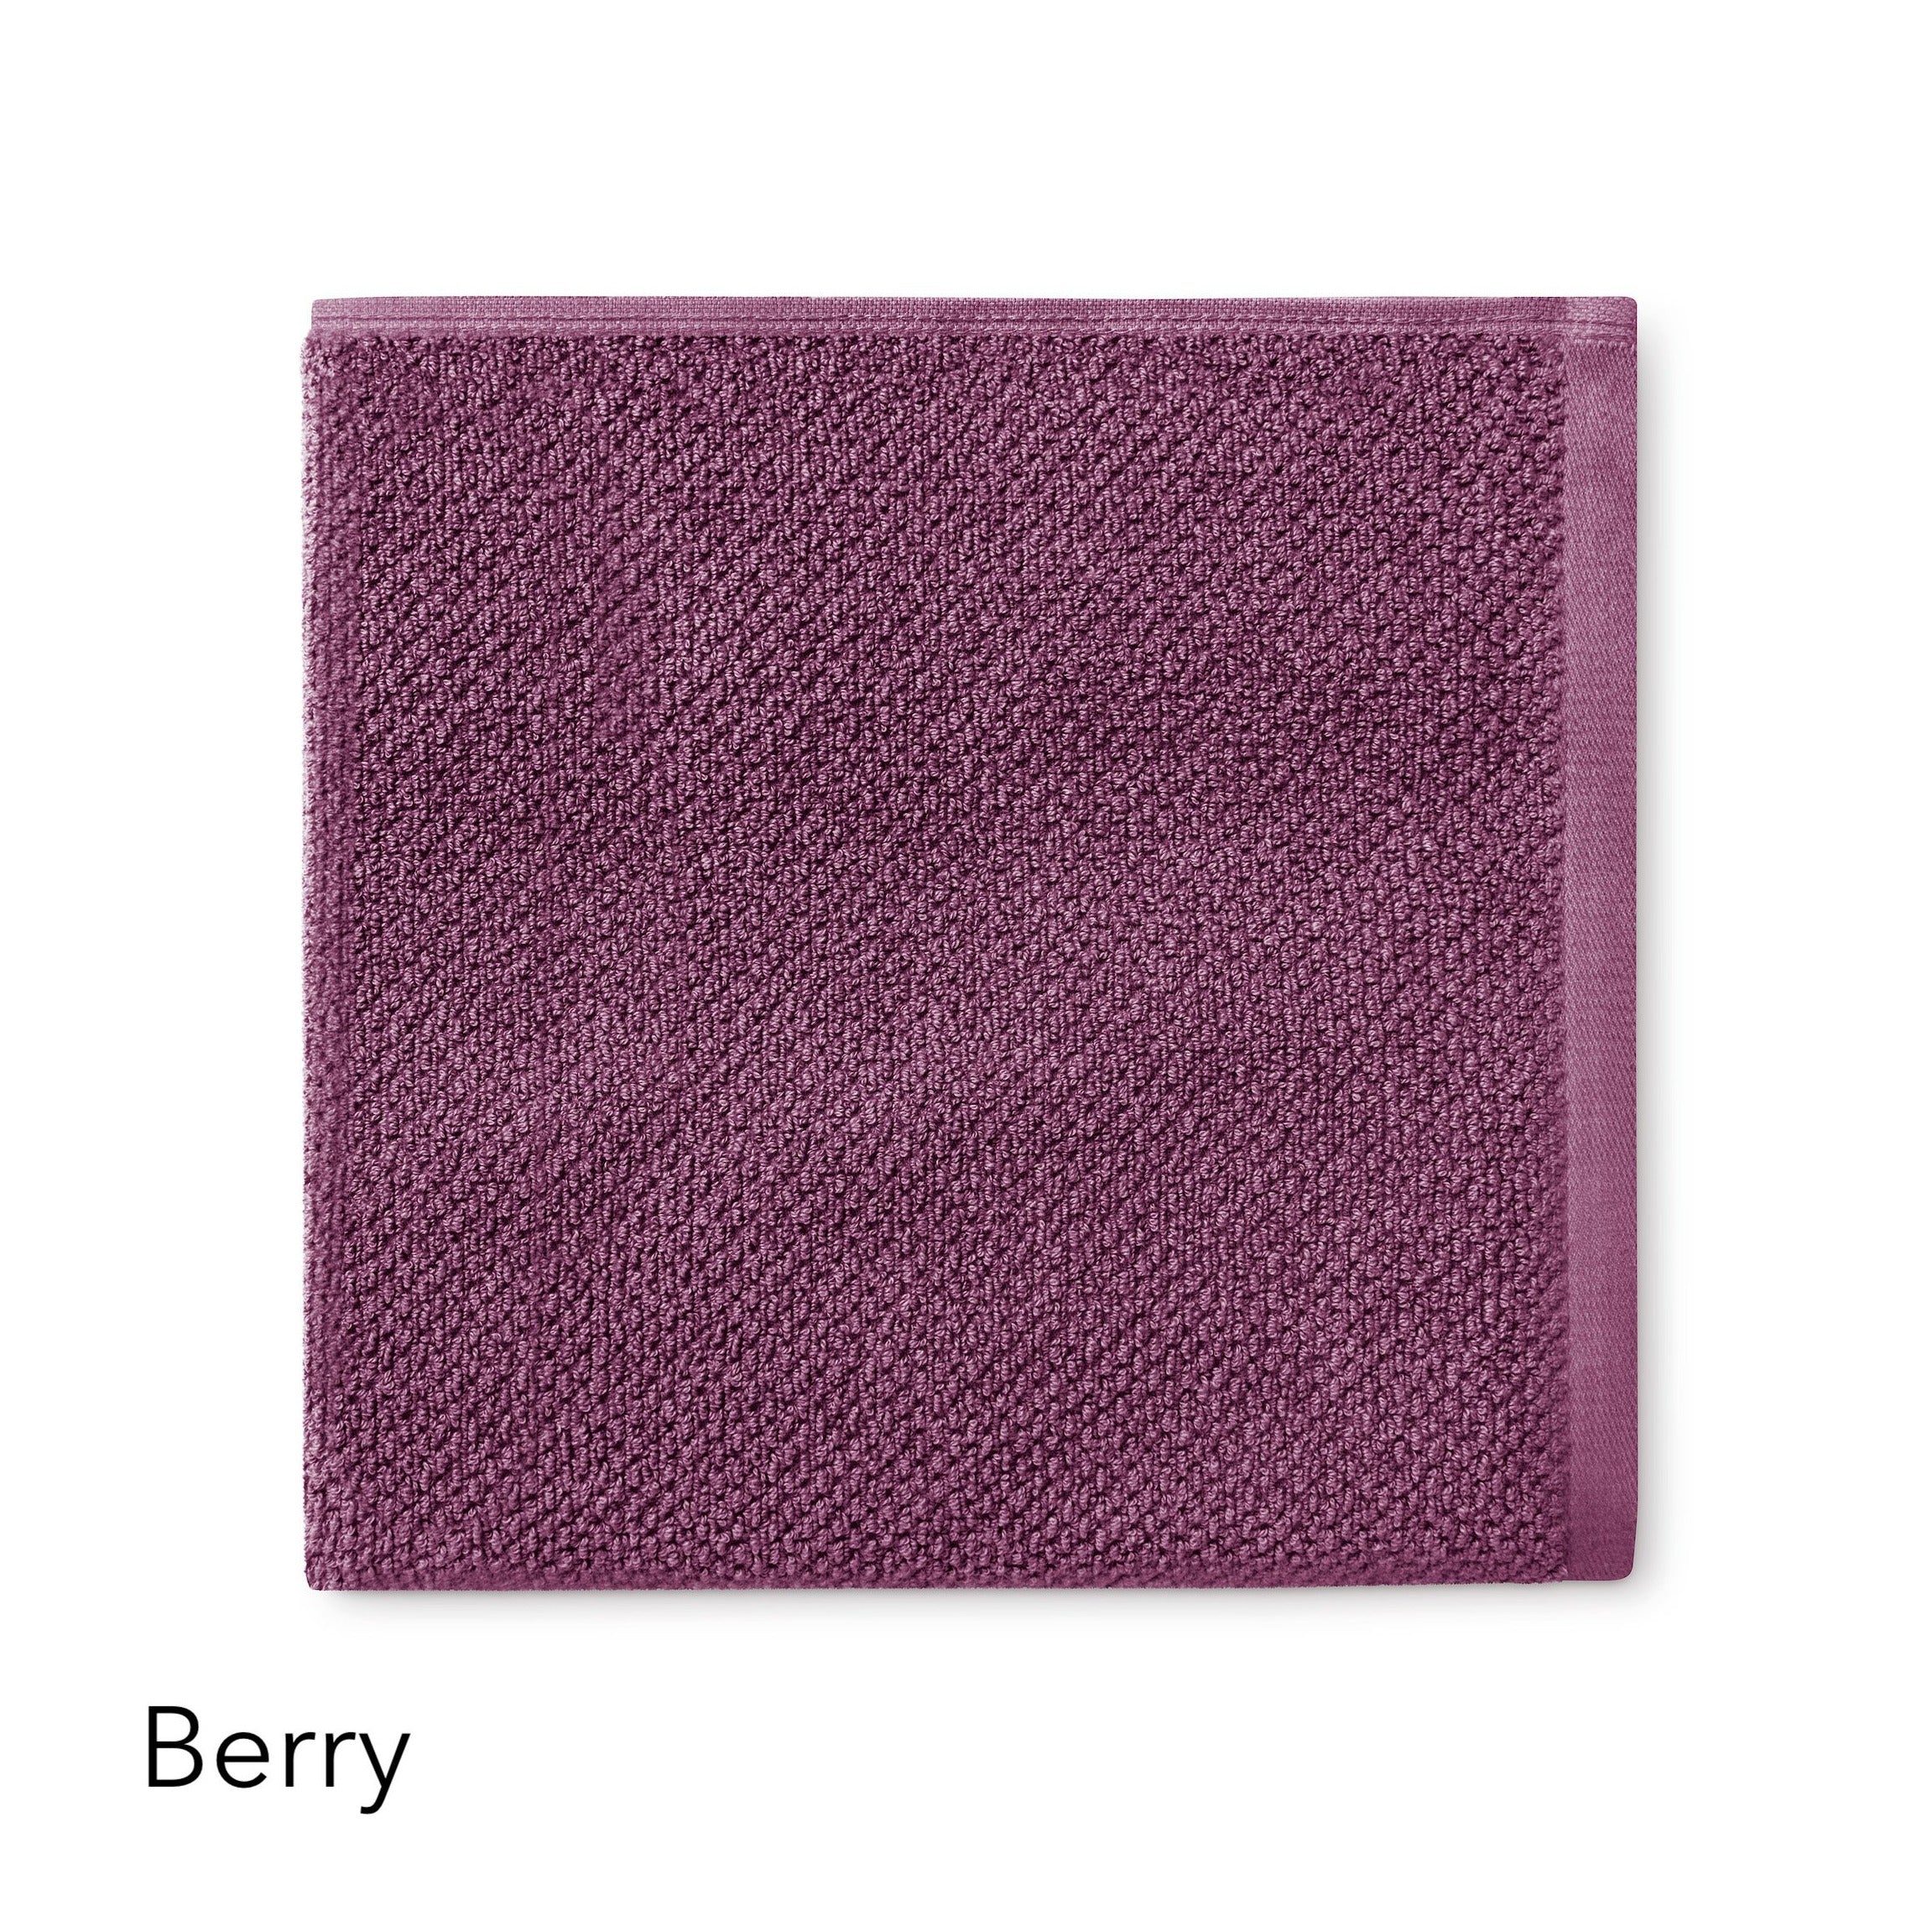 Buy berry Nova Organic Cotton Towels